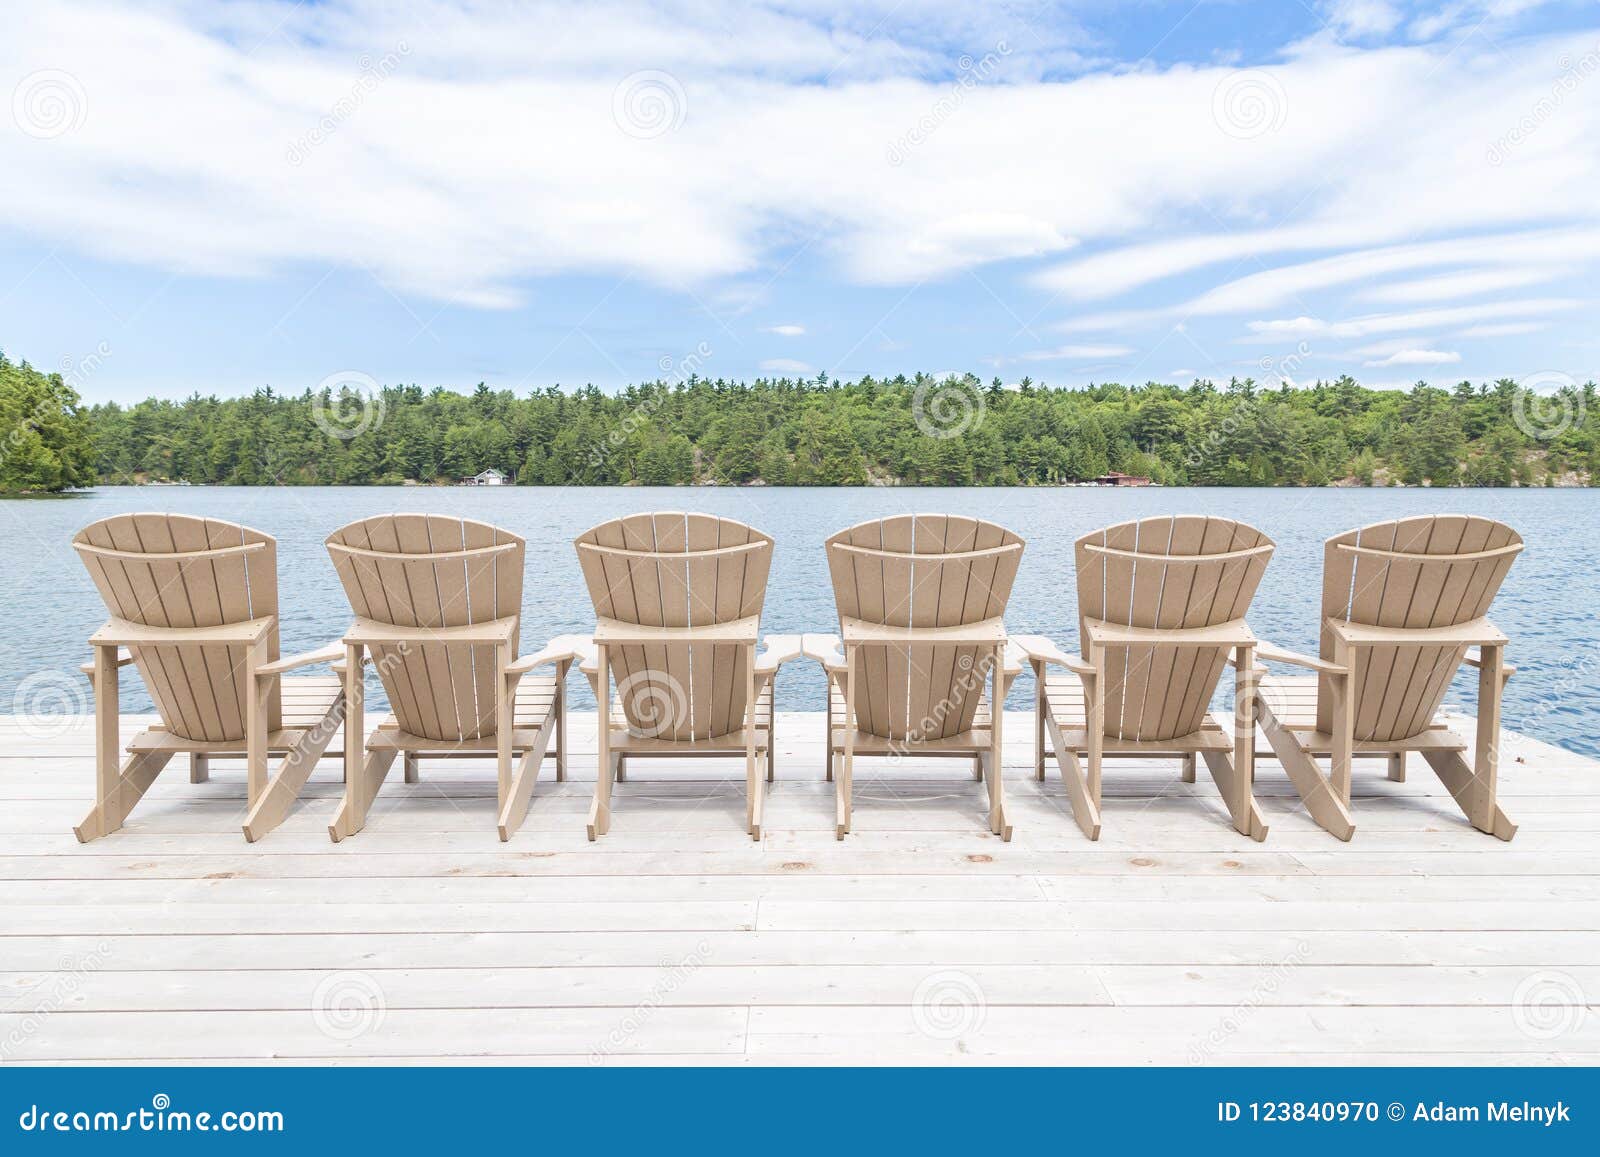 row of muskoka chairs on a dock looking onto the lake.